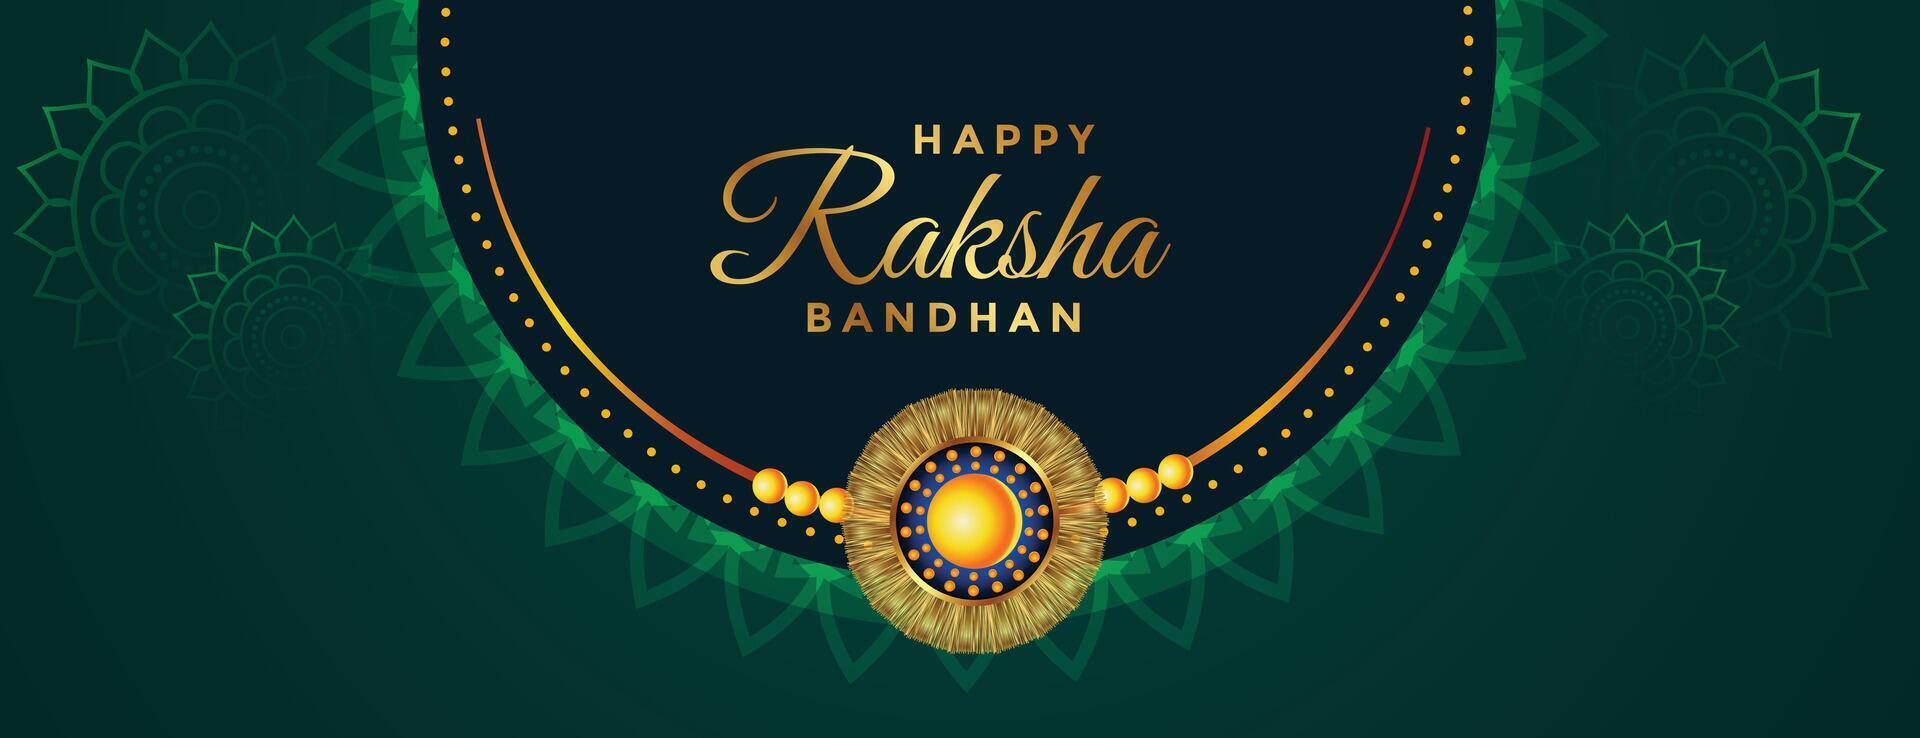 traditioneel mooi raksha bandhan festival banier ontwerp vector